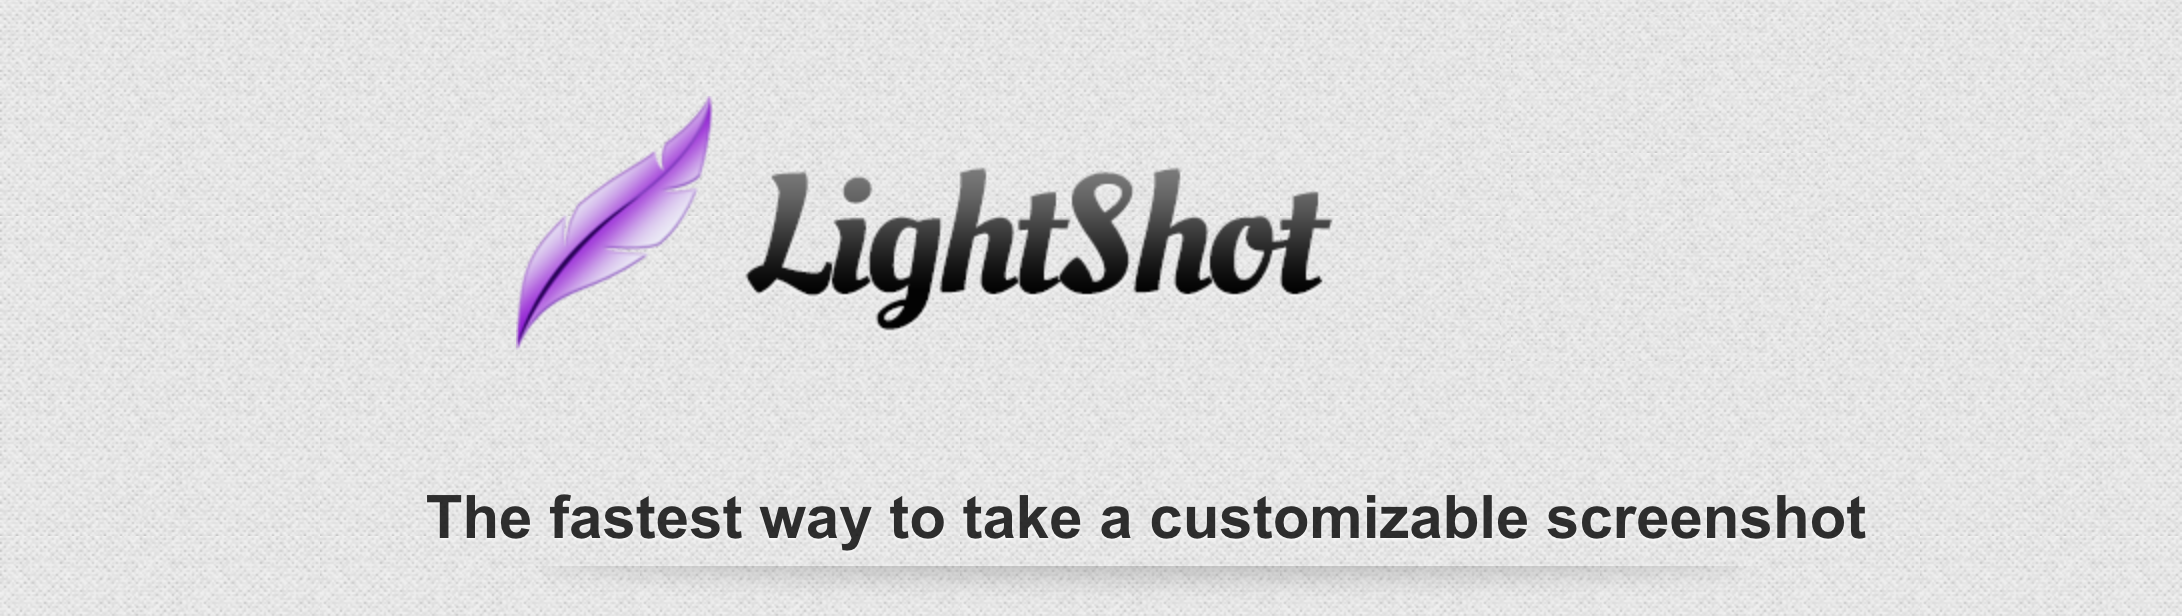 Xzxc3 https a9fm github io lightshot. Lightshot. Lightshot логотип. Lightshot ярлык. Программа Lightshot.